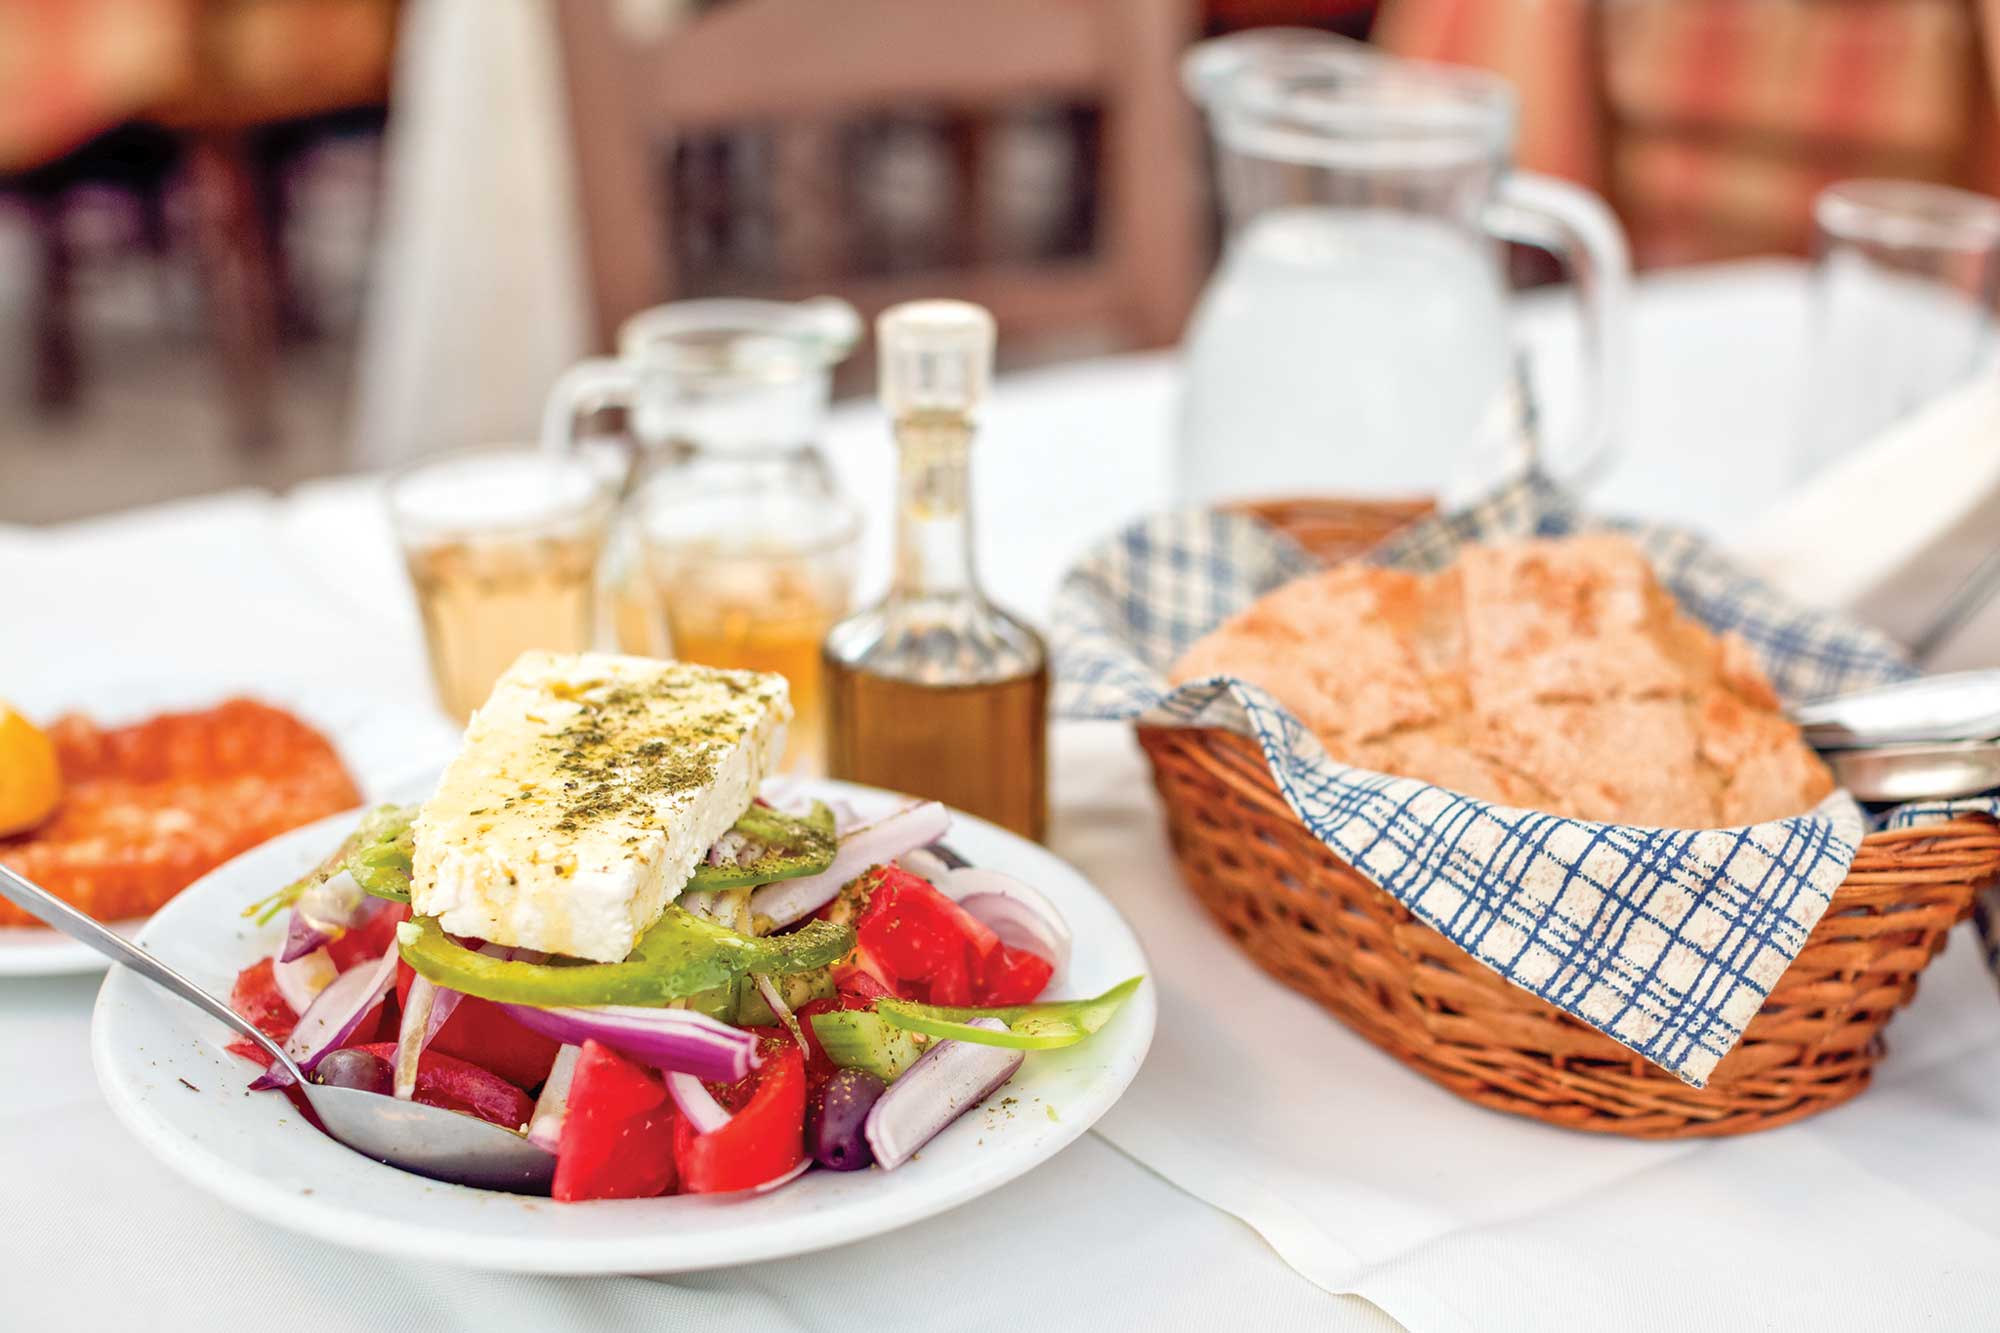 Classic Greek restaurants